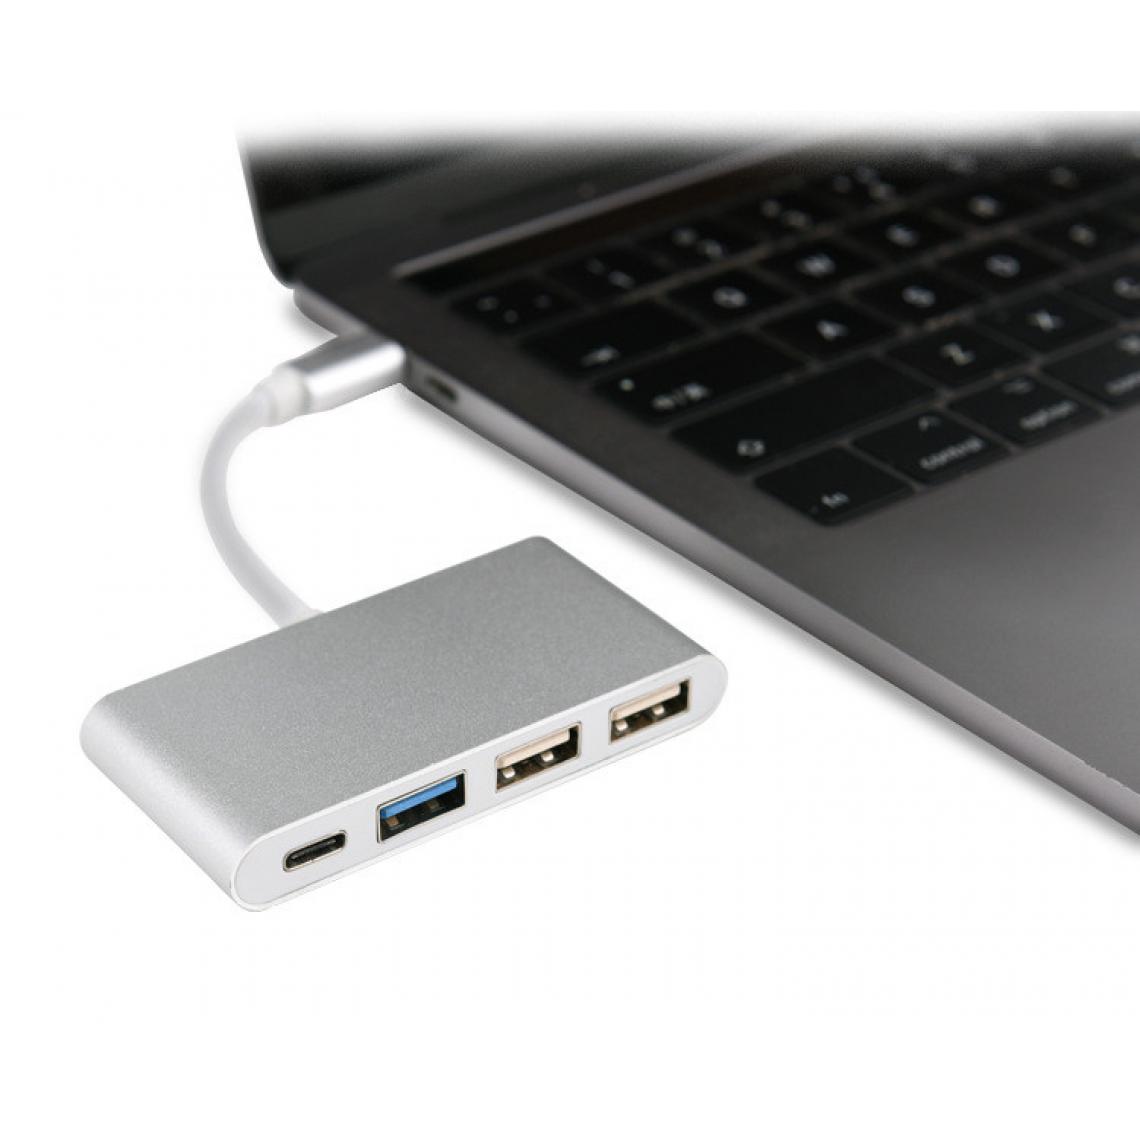 Shot - Multi Adaptateur 4 en 1 Type C pour MAC Mini APPLE Smartphone Hub 2 ports USB 2.0 1 Port USB 3.0 (ARGENT) - Hub